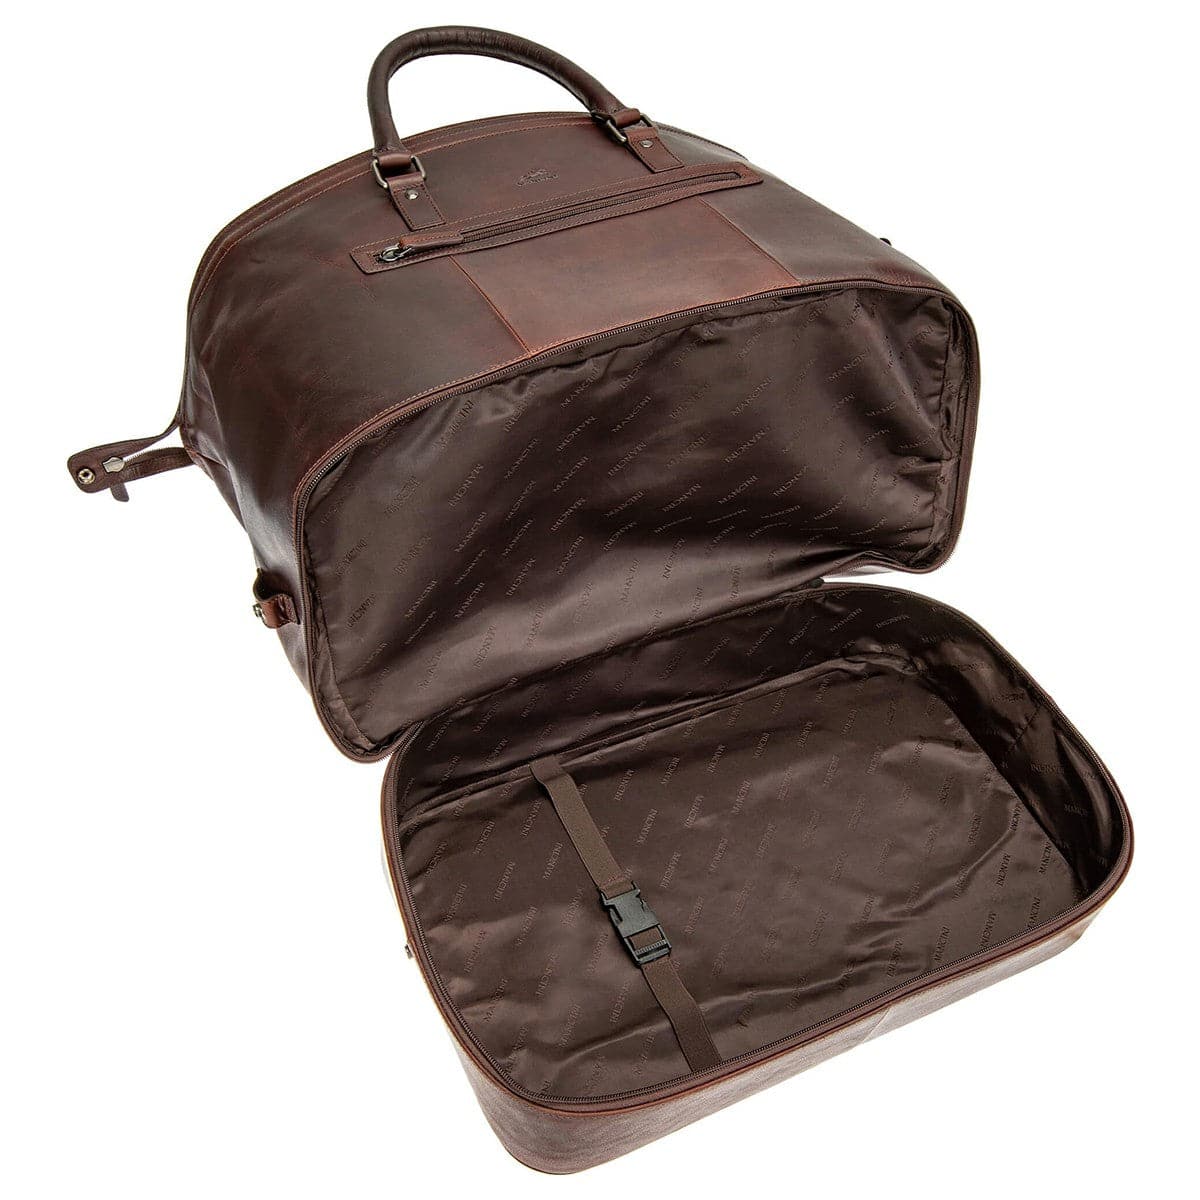 Mancini Buffalo Double Compartment Duffle Bag